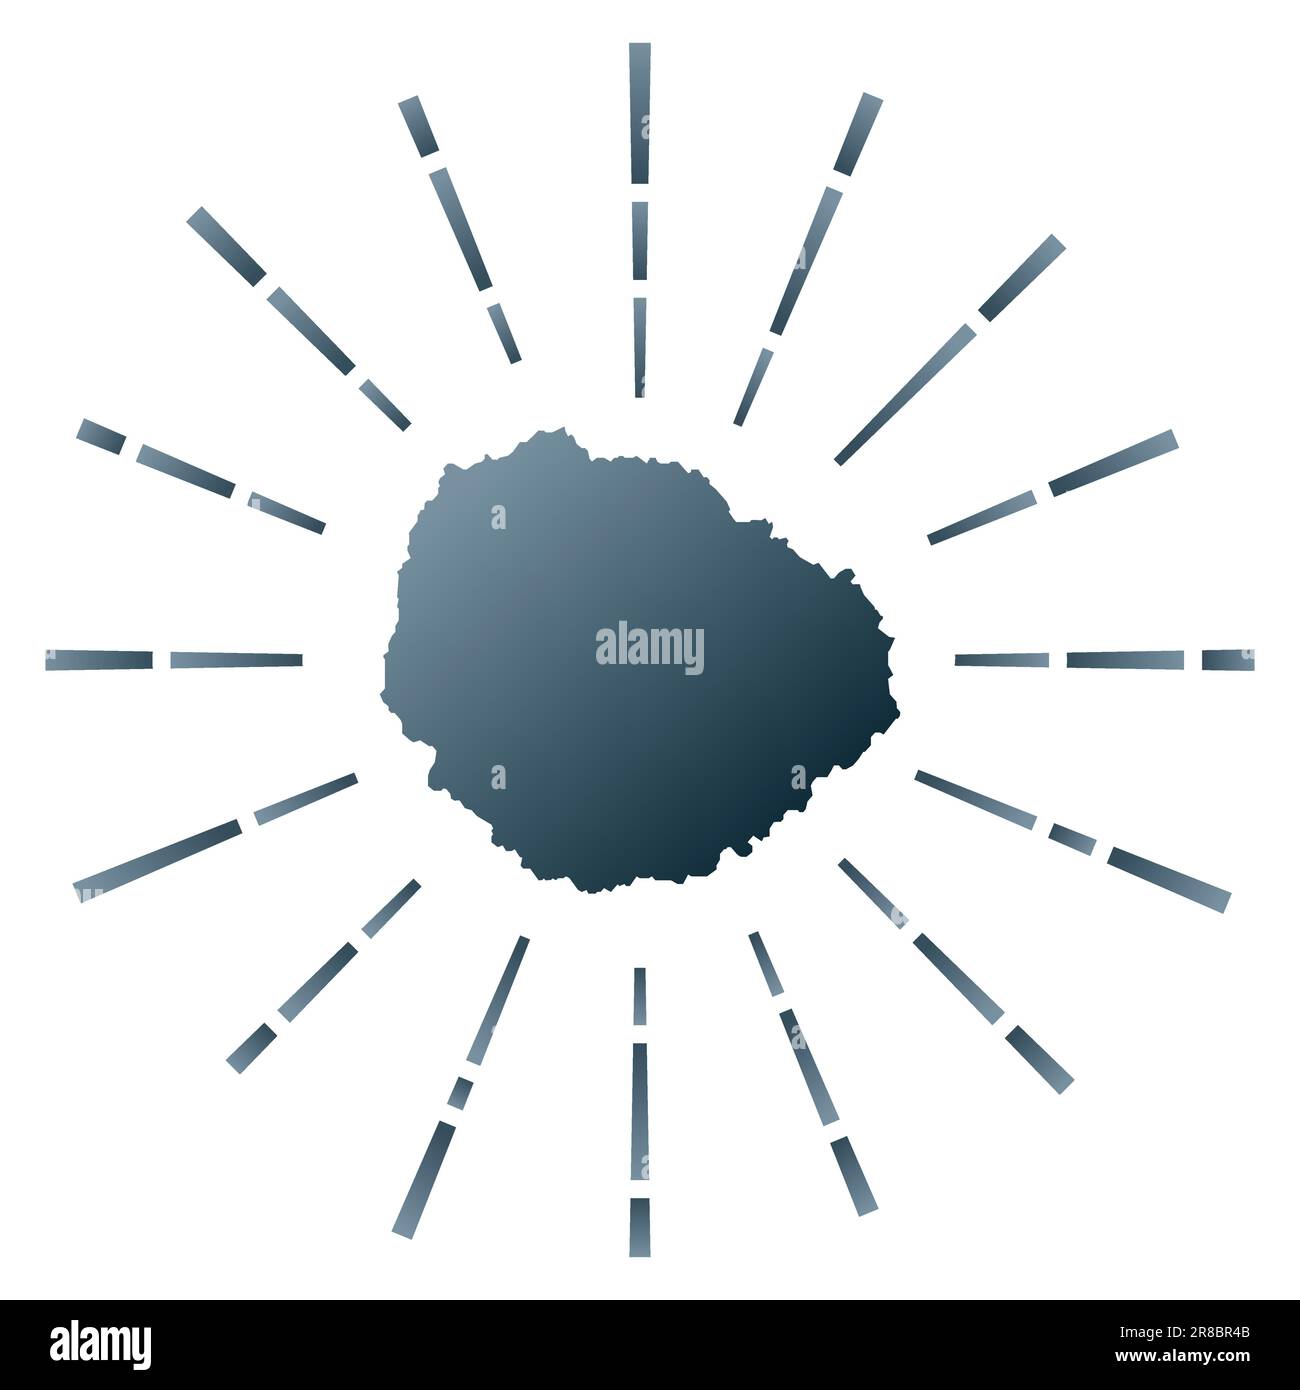 La Gomera mit Sonnenaufgang. Karte der Insel mit bunten Sternrochen. La Gomera Illustration in Digital, Technologie, Internet, Netzwerkstil. Vect Stock Vektor